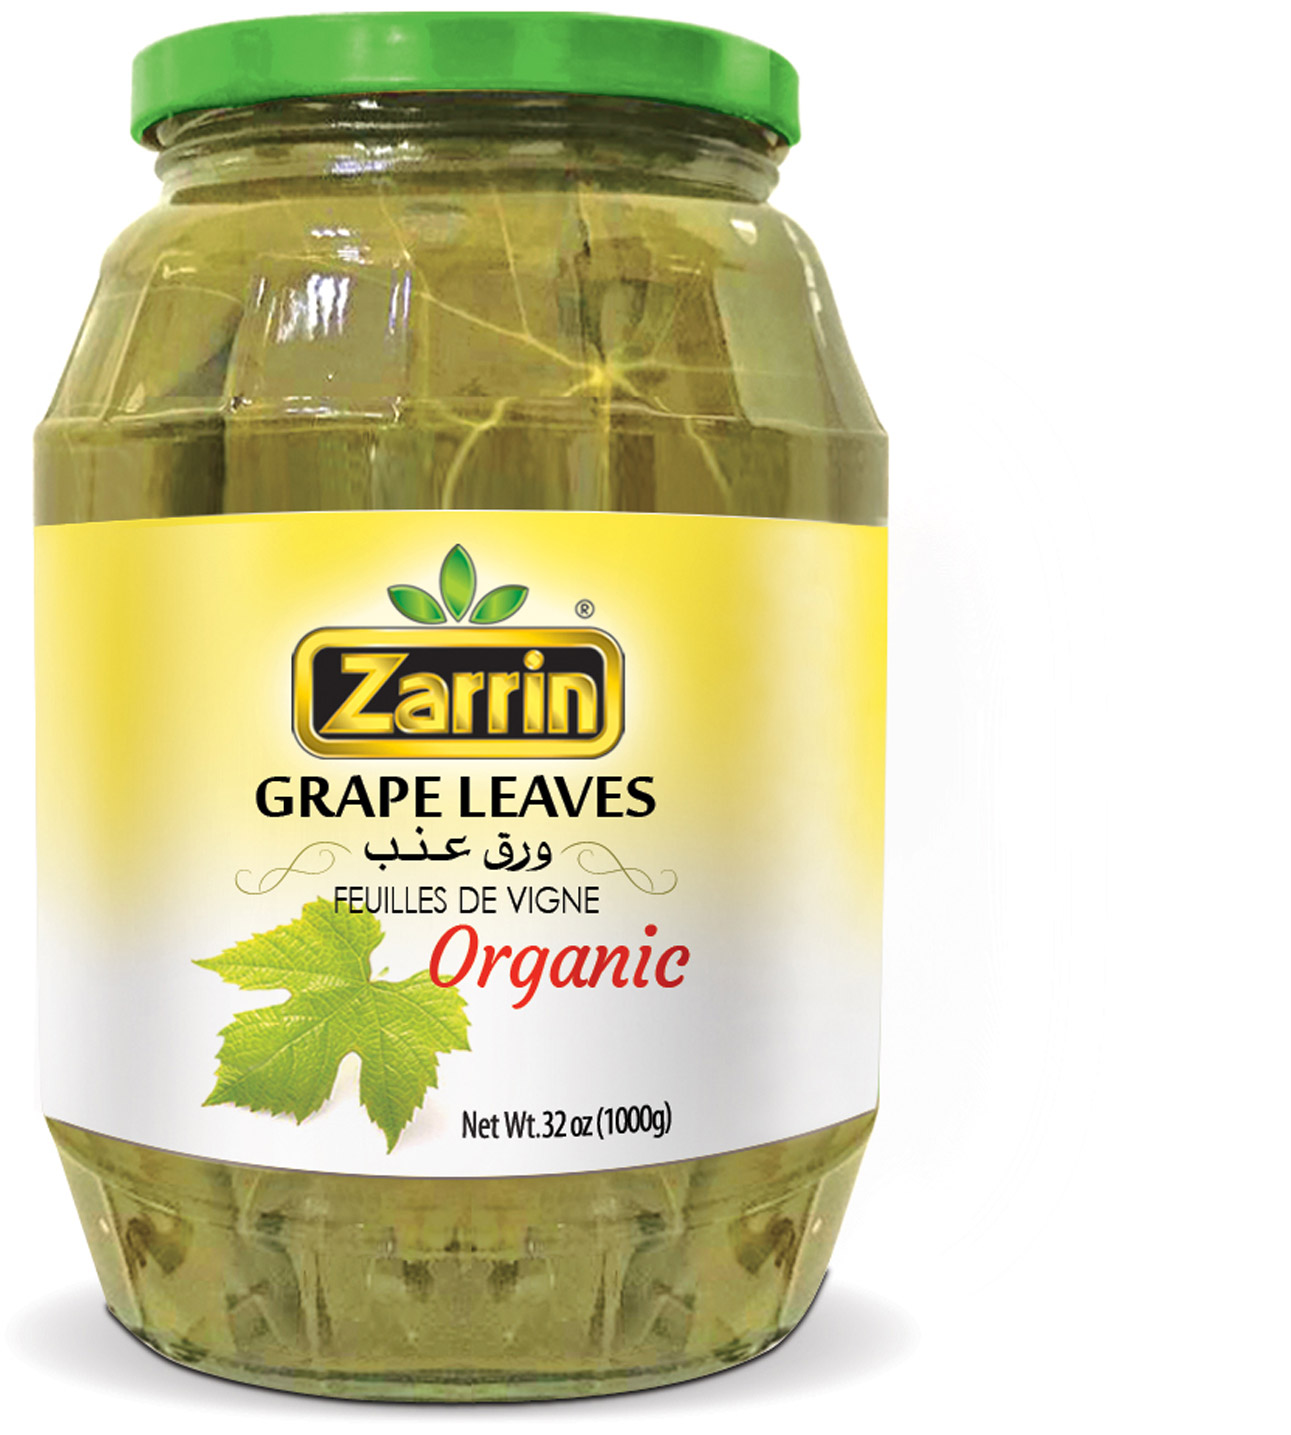 Zarrin organic grape leaves in 32 oz glass jar.